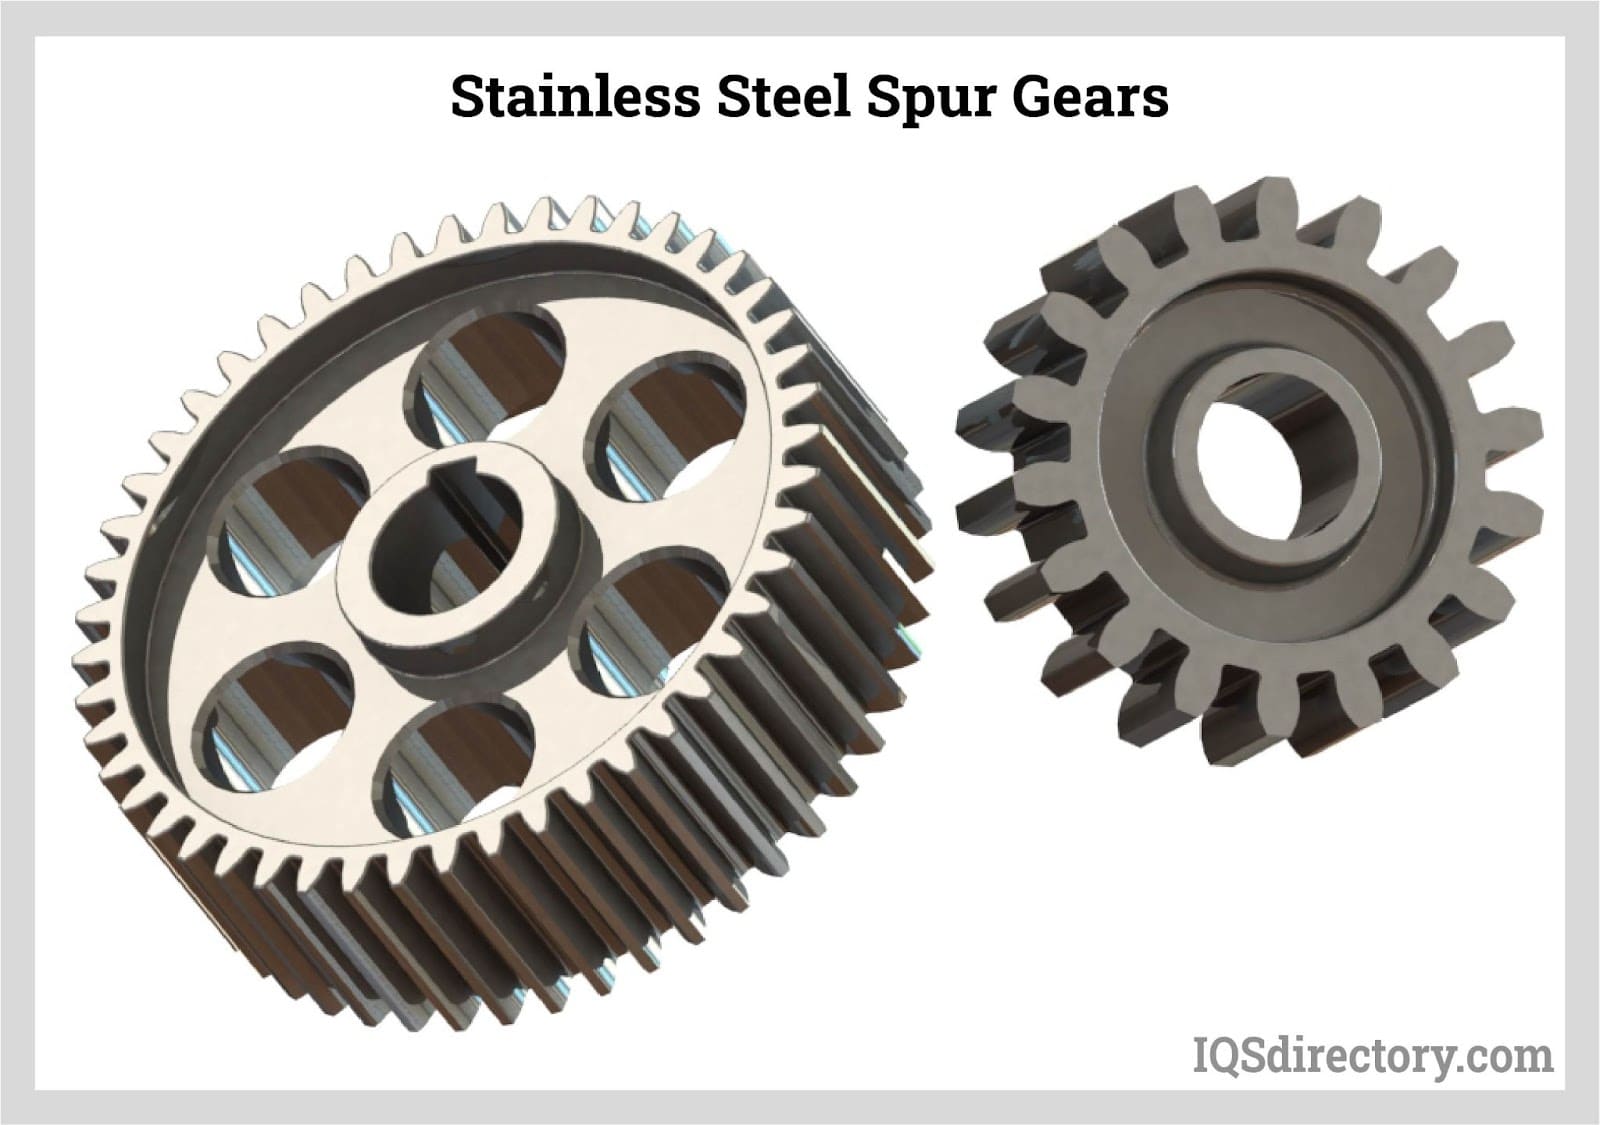 Stainless Steel Spur Gears